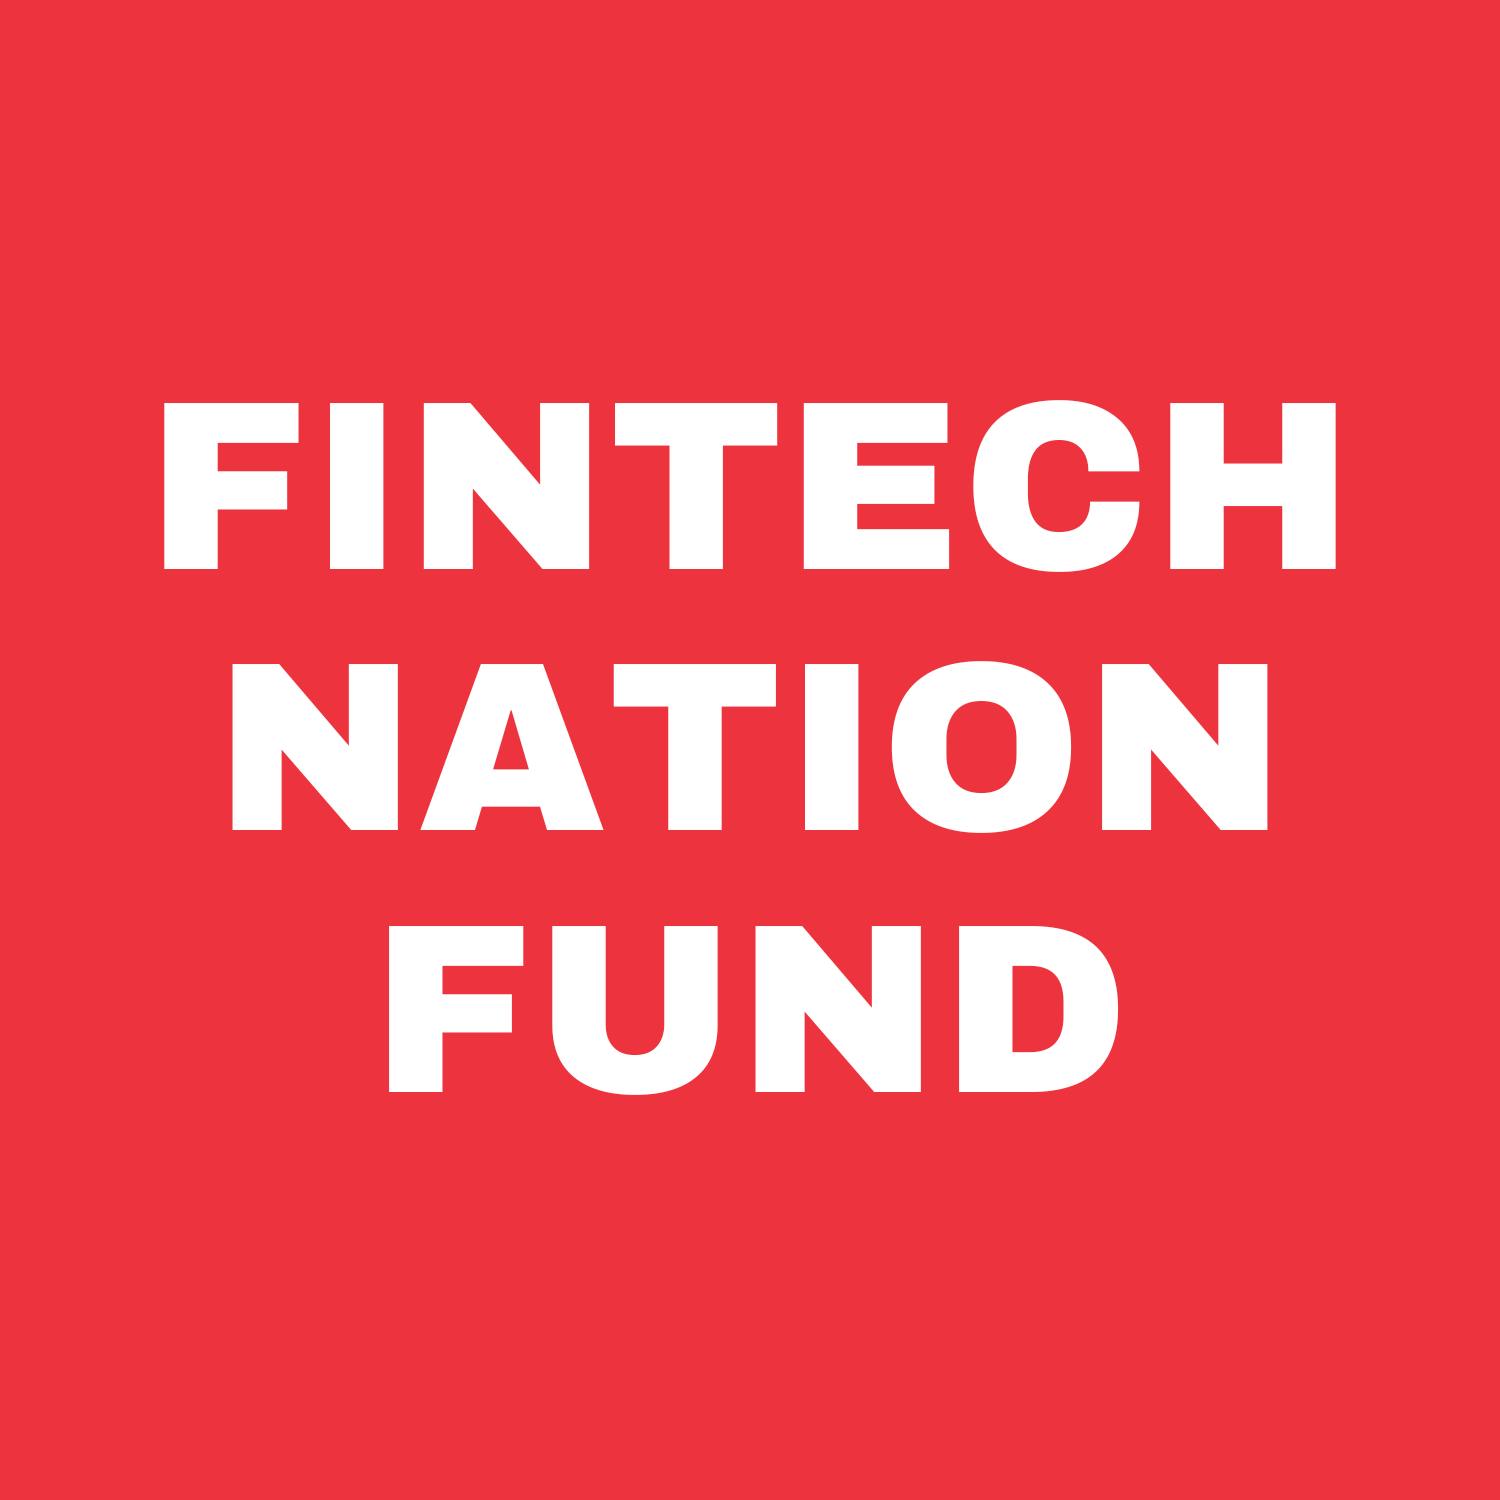 Fintech Nation Fund by Varun Mittal